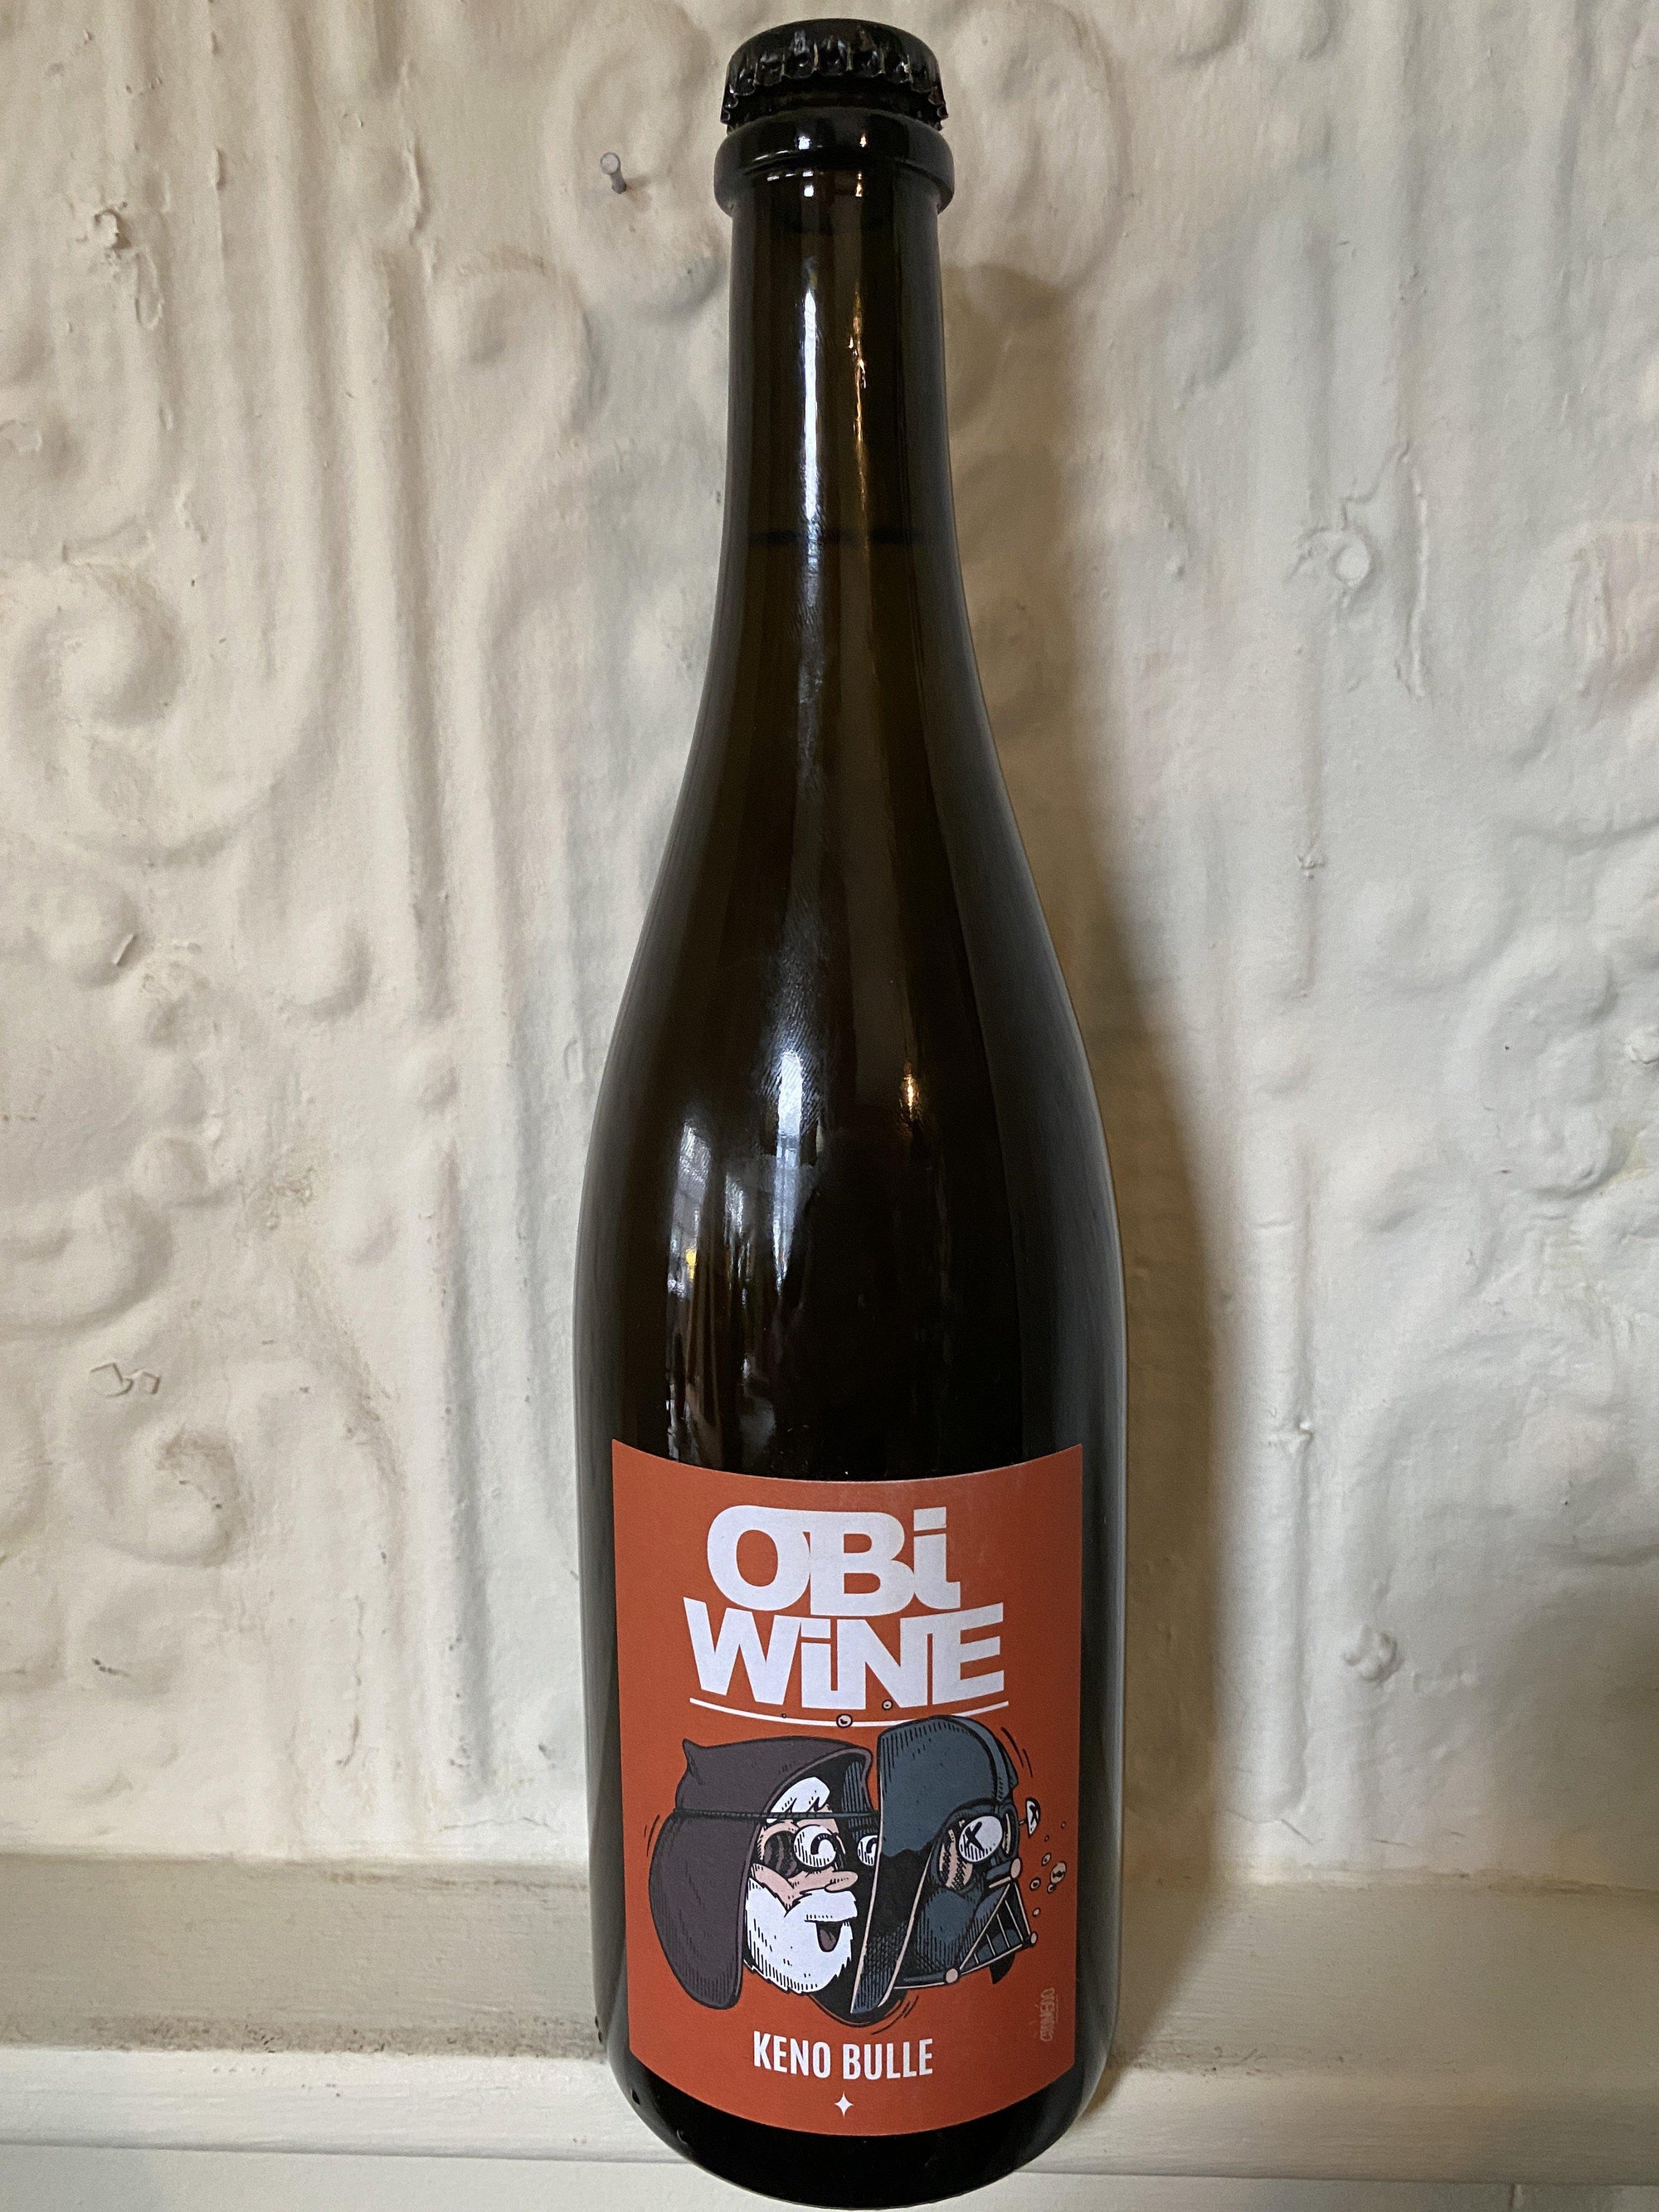 Obi Wine Keno Bulle, Domaine Geschickt 2019 (Alsace, France)